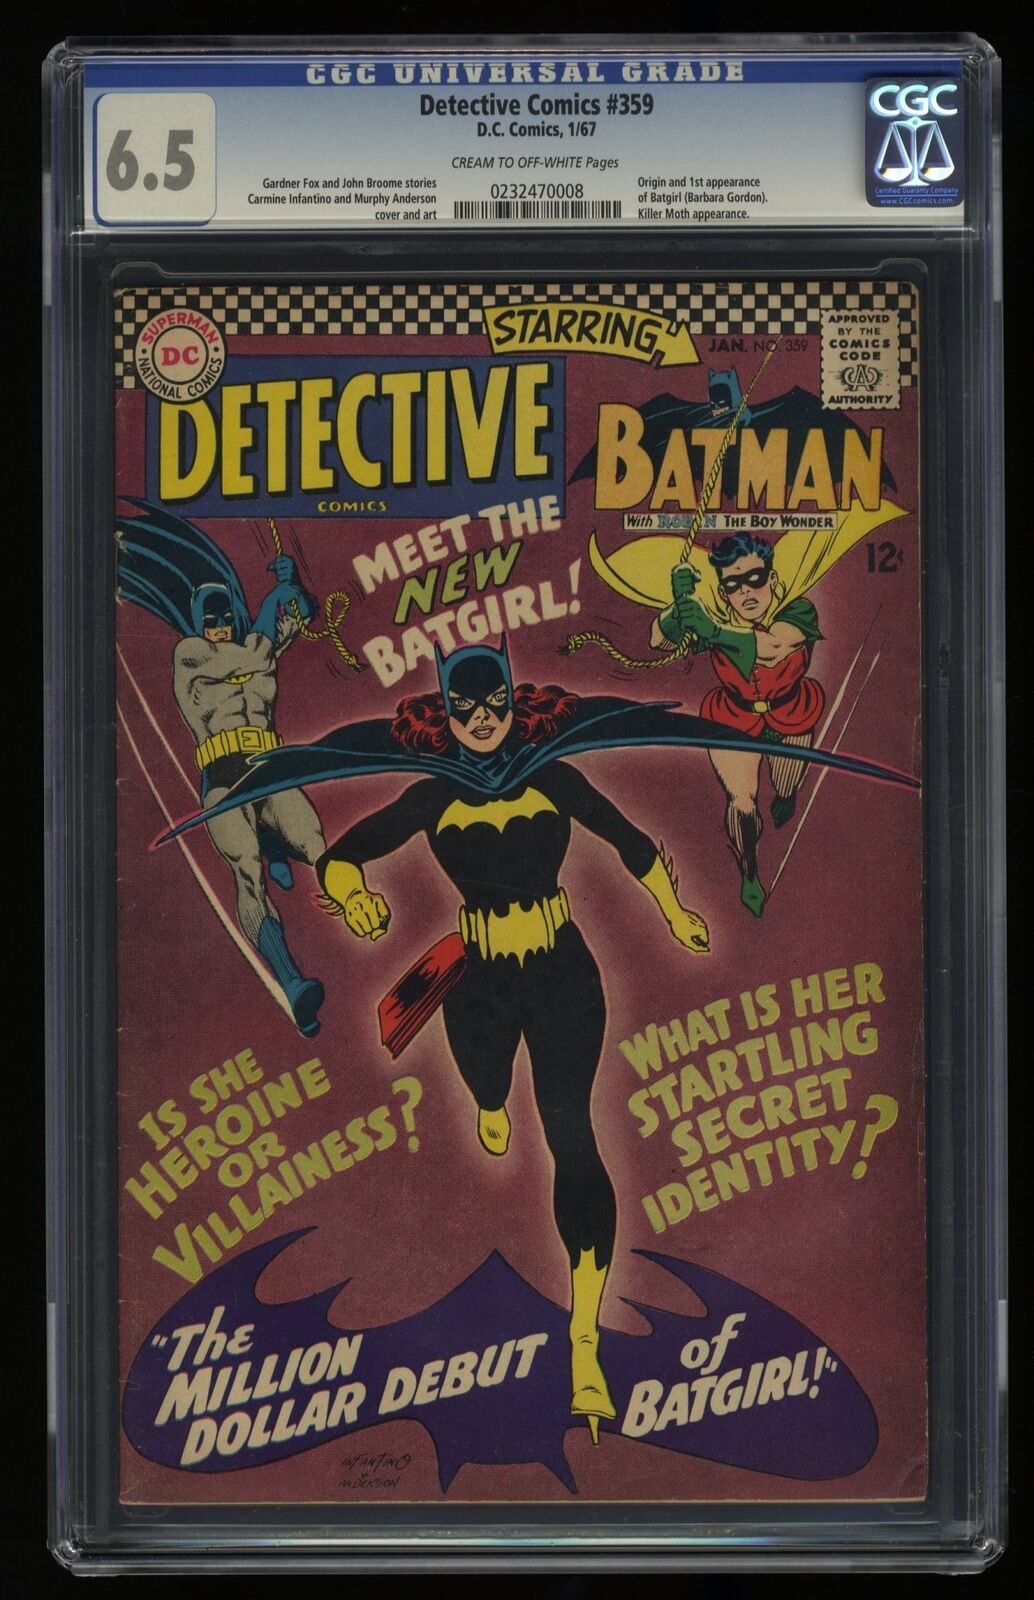 Detective Comics #359 CGC FN+ 6.5 1st Appearance Batgirl (Barbara Gordon)